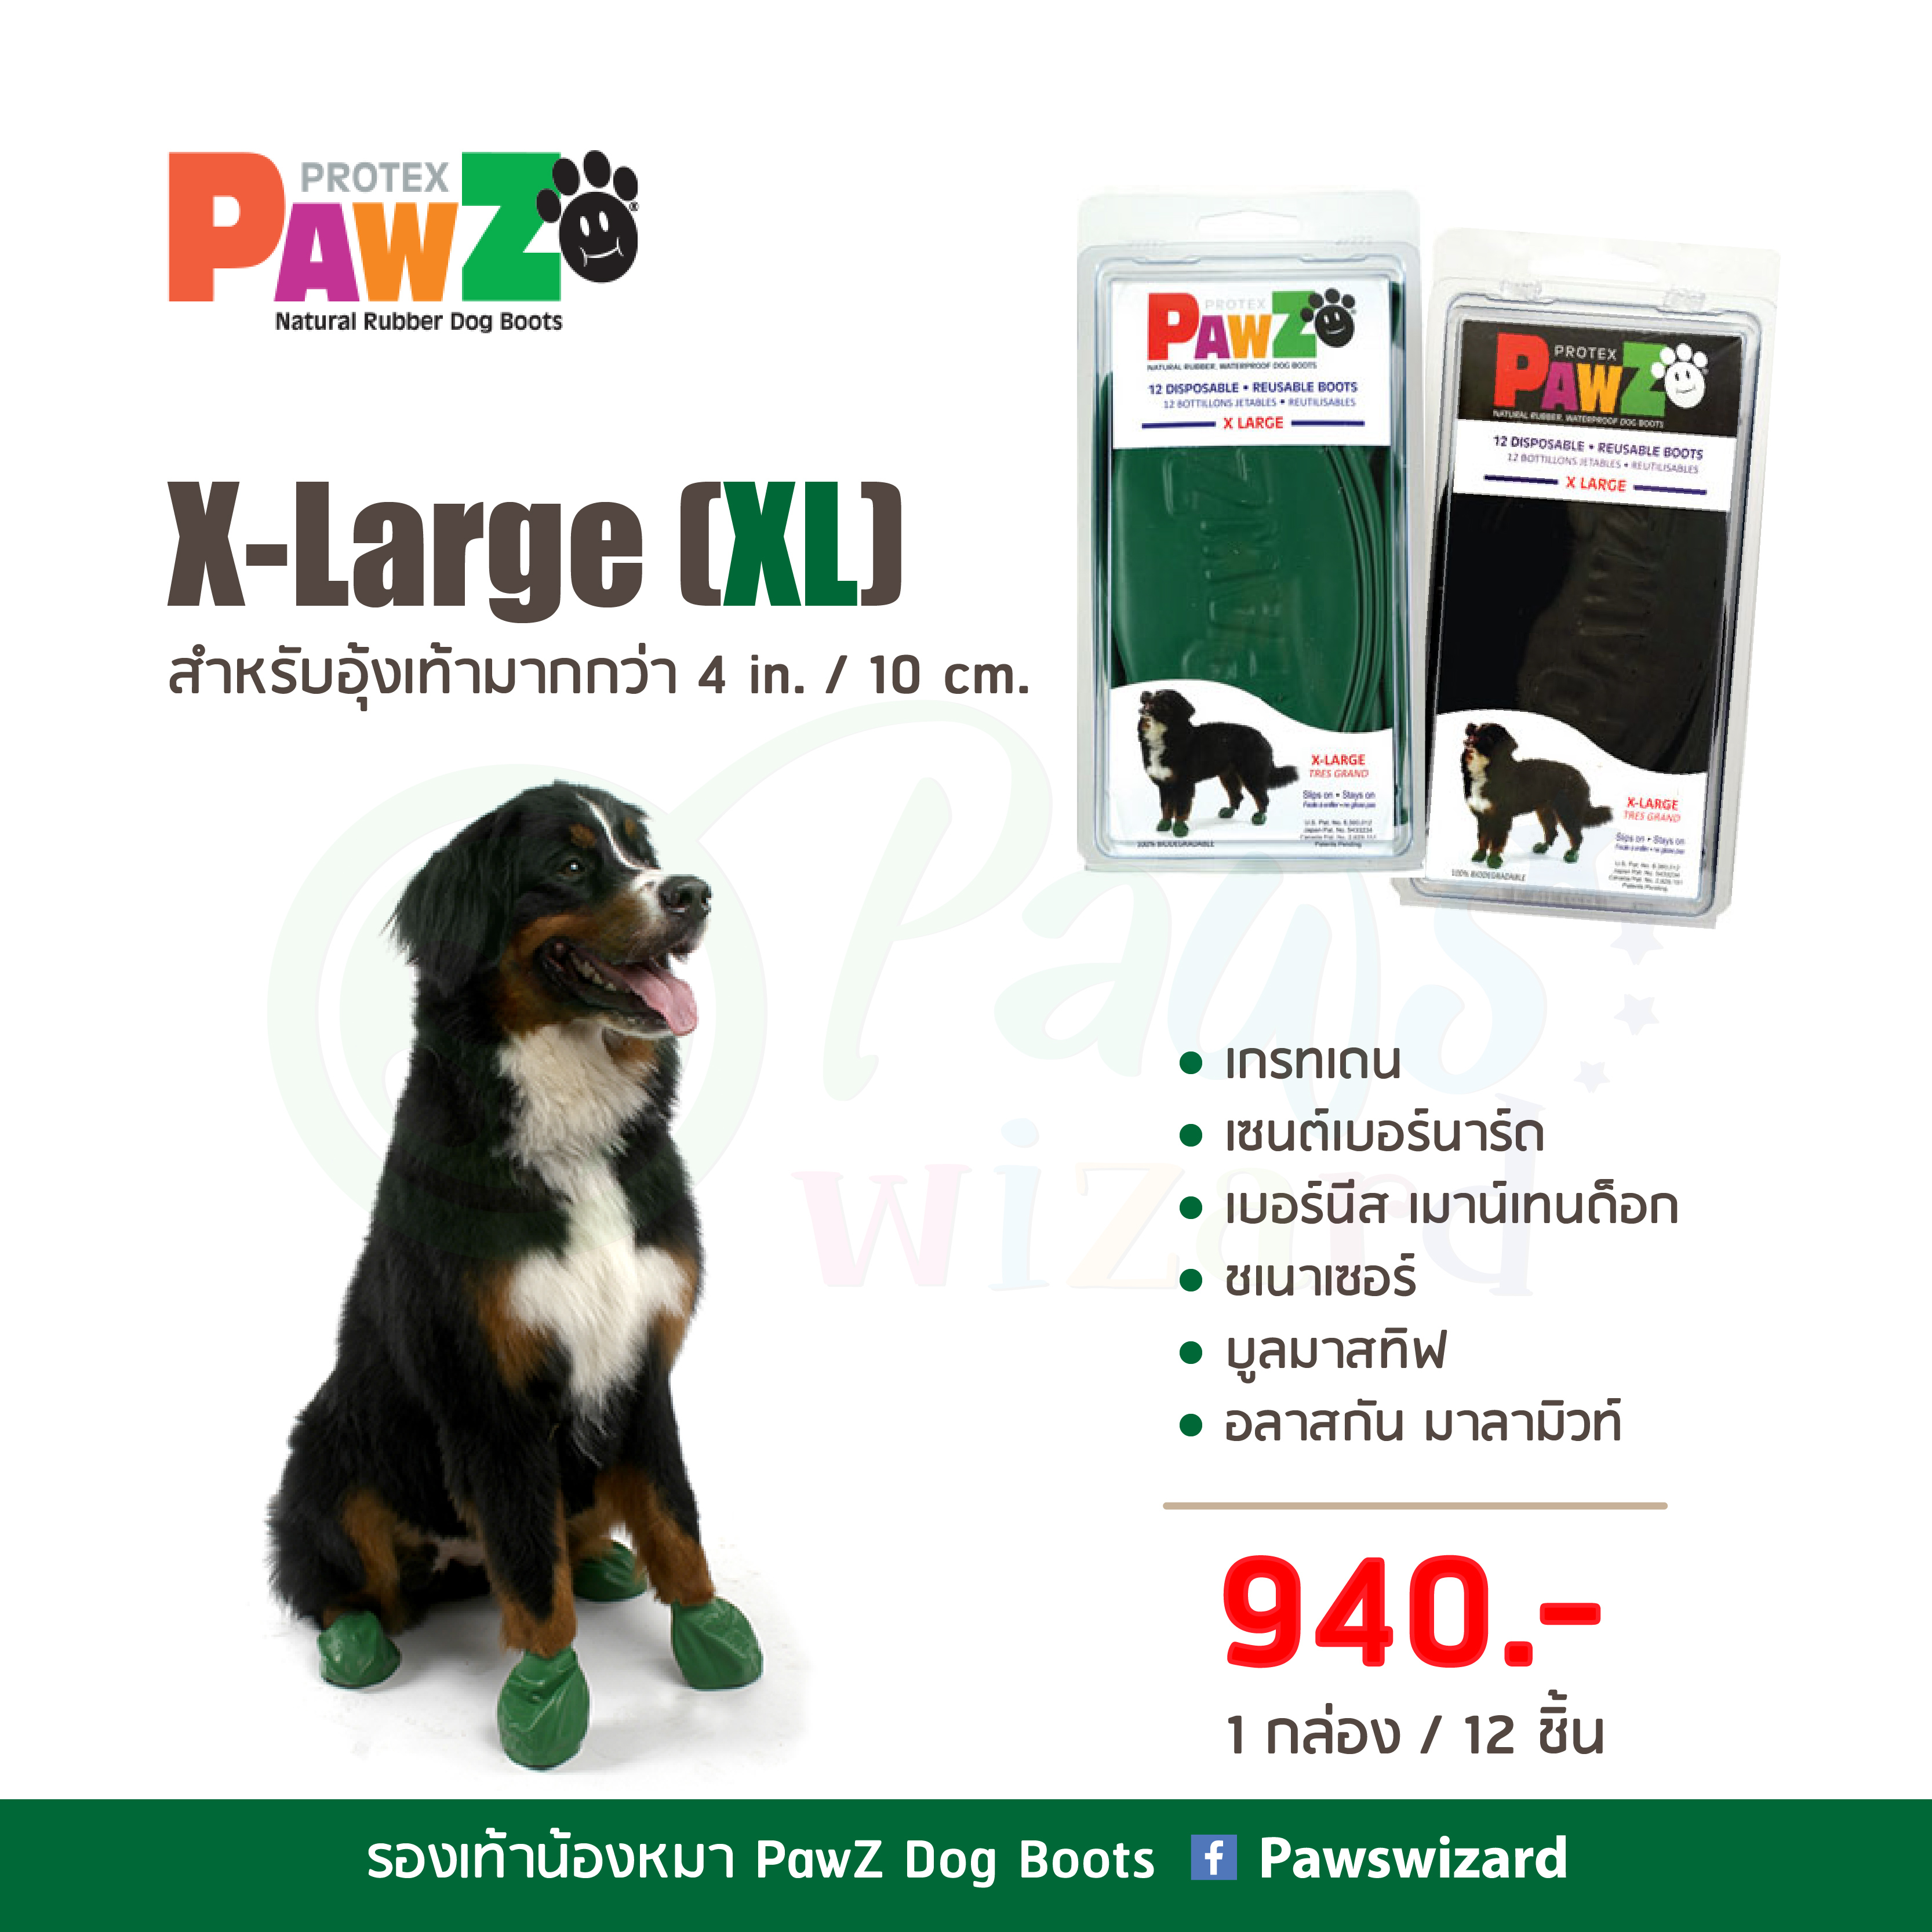 PawZ Dog Boots รองเท้าสุนัข (12ชิ้น) รองเท้าสุนัขกันลื่นกันน้ำ ไซส์ X-Large (XL) สำหรับอุ้งเท้ามากกว่า 4 in. / 10 cm.